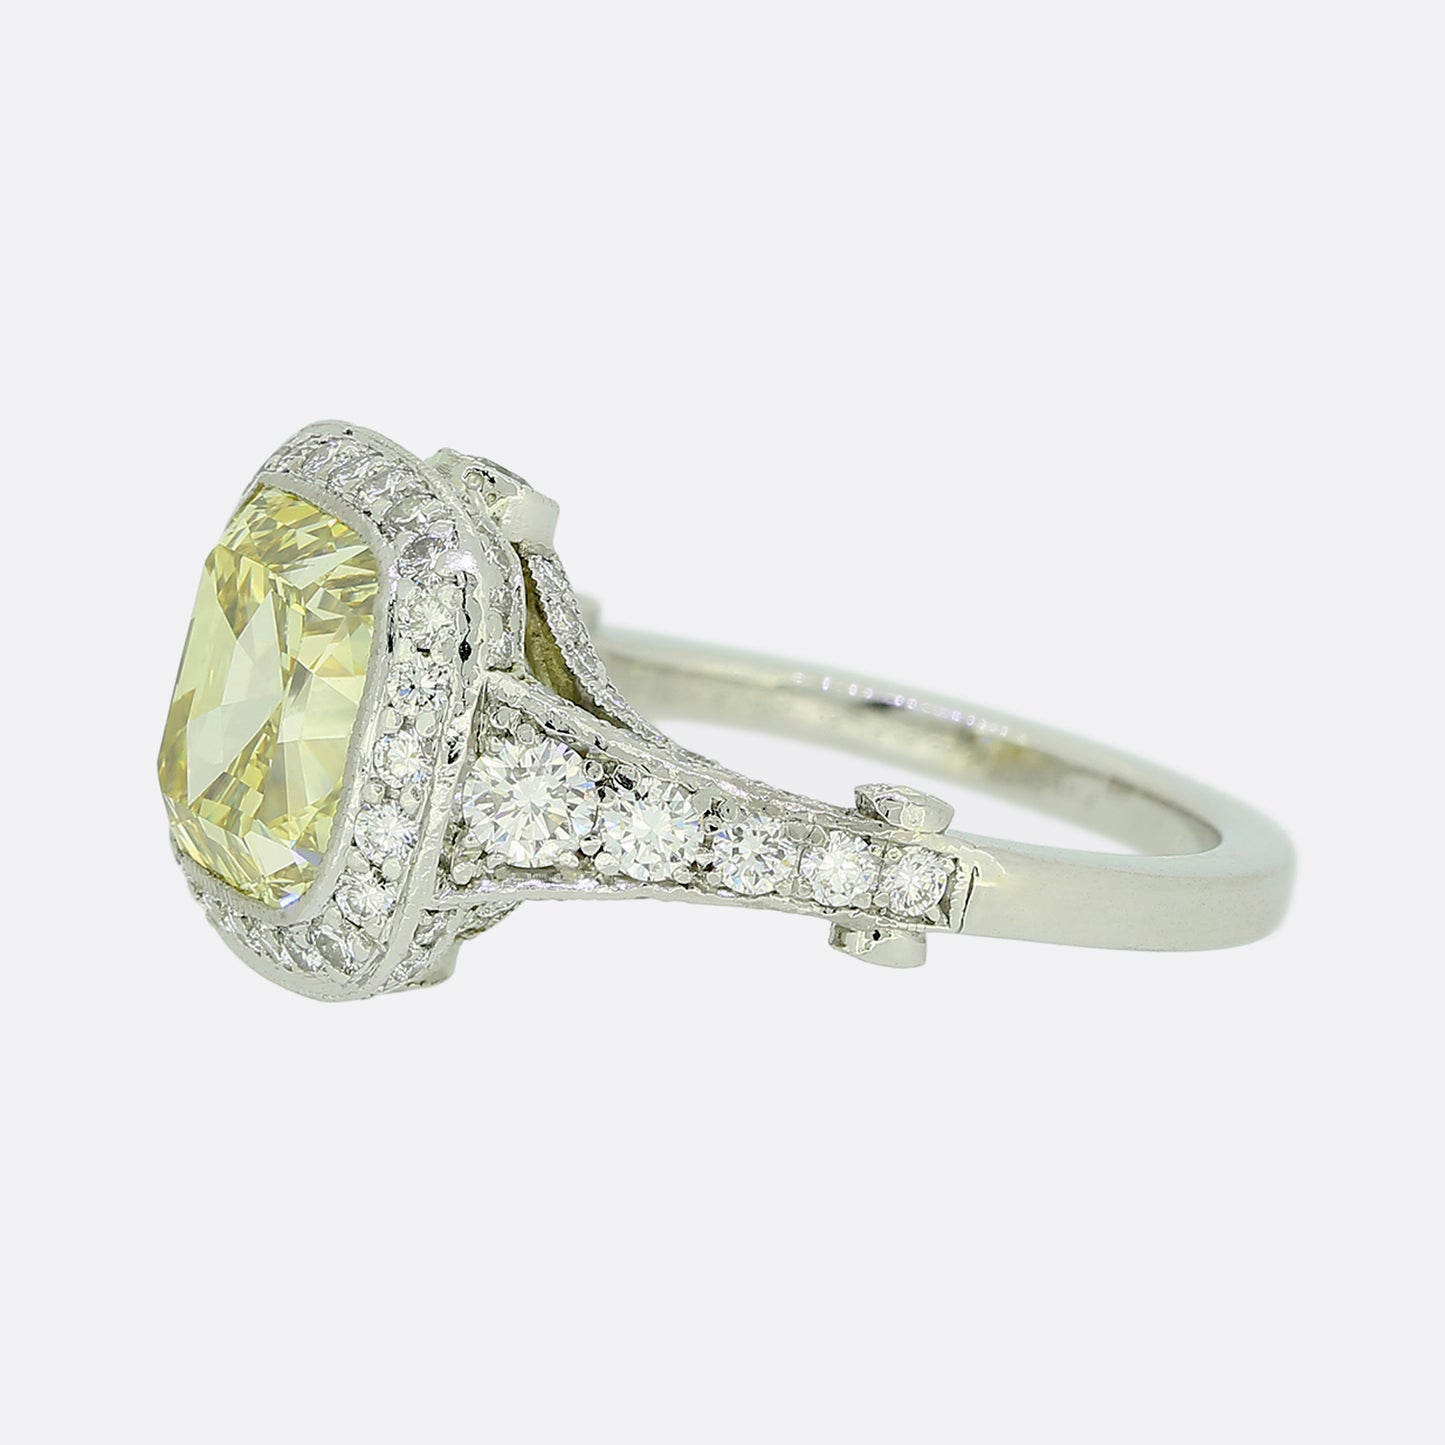 Tiffany & Co. Legacy 4.0 Carat Fancy Intense Yellow Diamond Engagement Ring